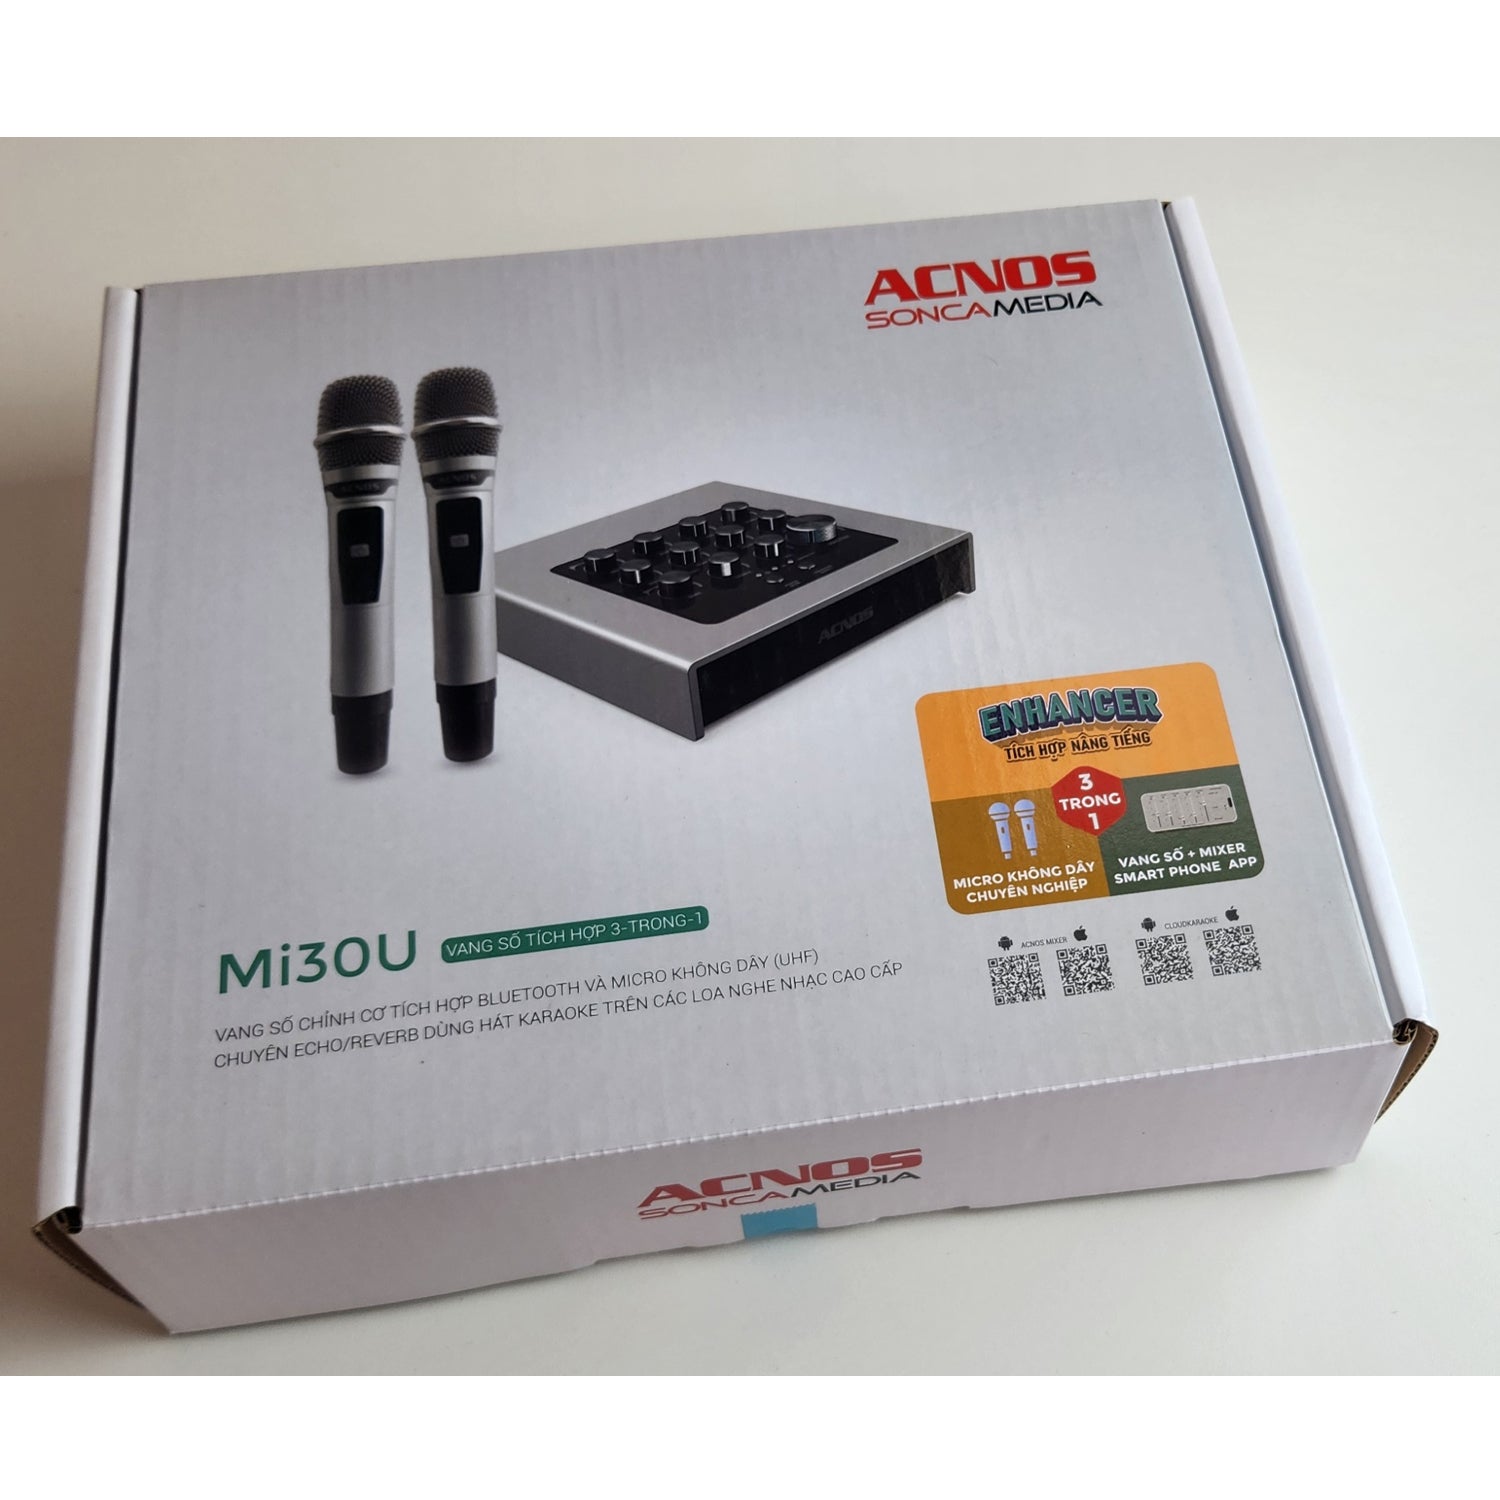 ACNOS Mi-30u (Gold) Compact Portable Karaoke Enhancer Mixer + 2 UHF Wireless Microphones + Carry Bag - Karaoke Home Entertainment